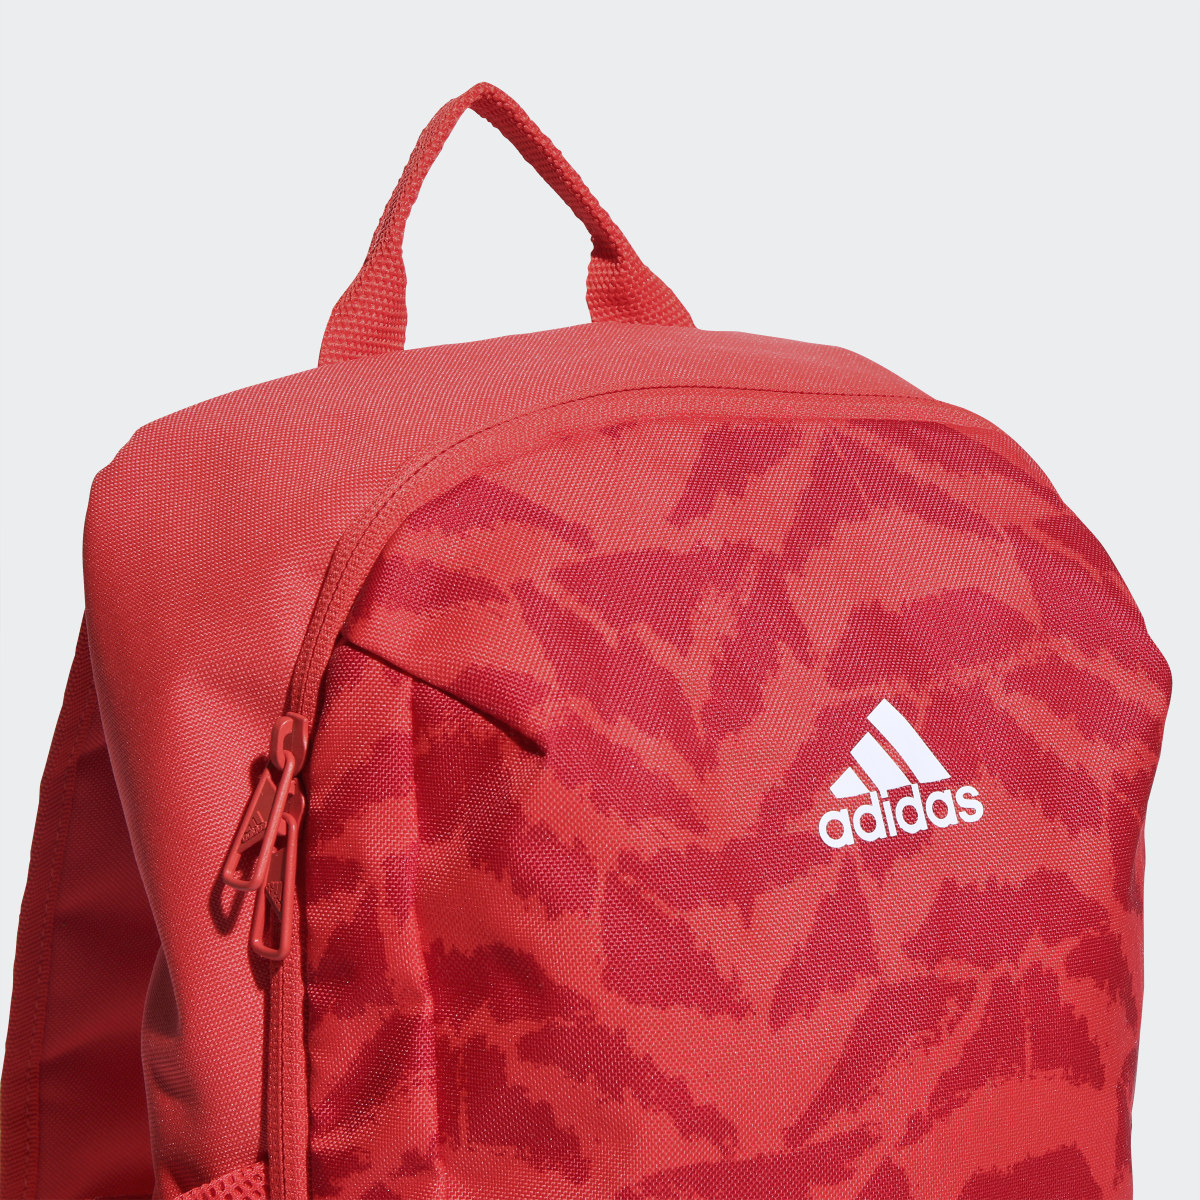 Adidas Football Backpack. 6